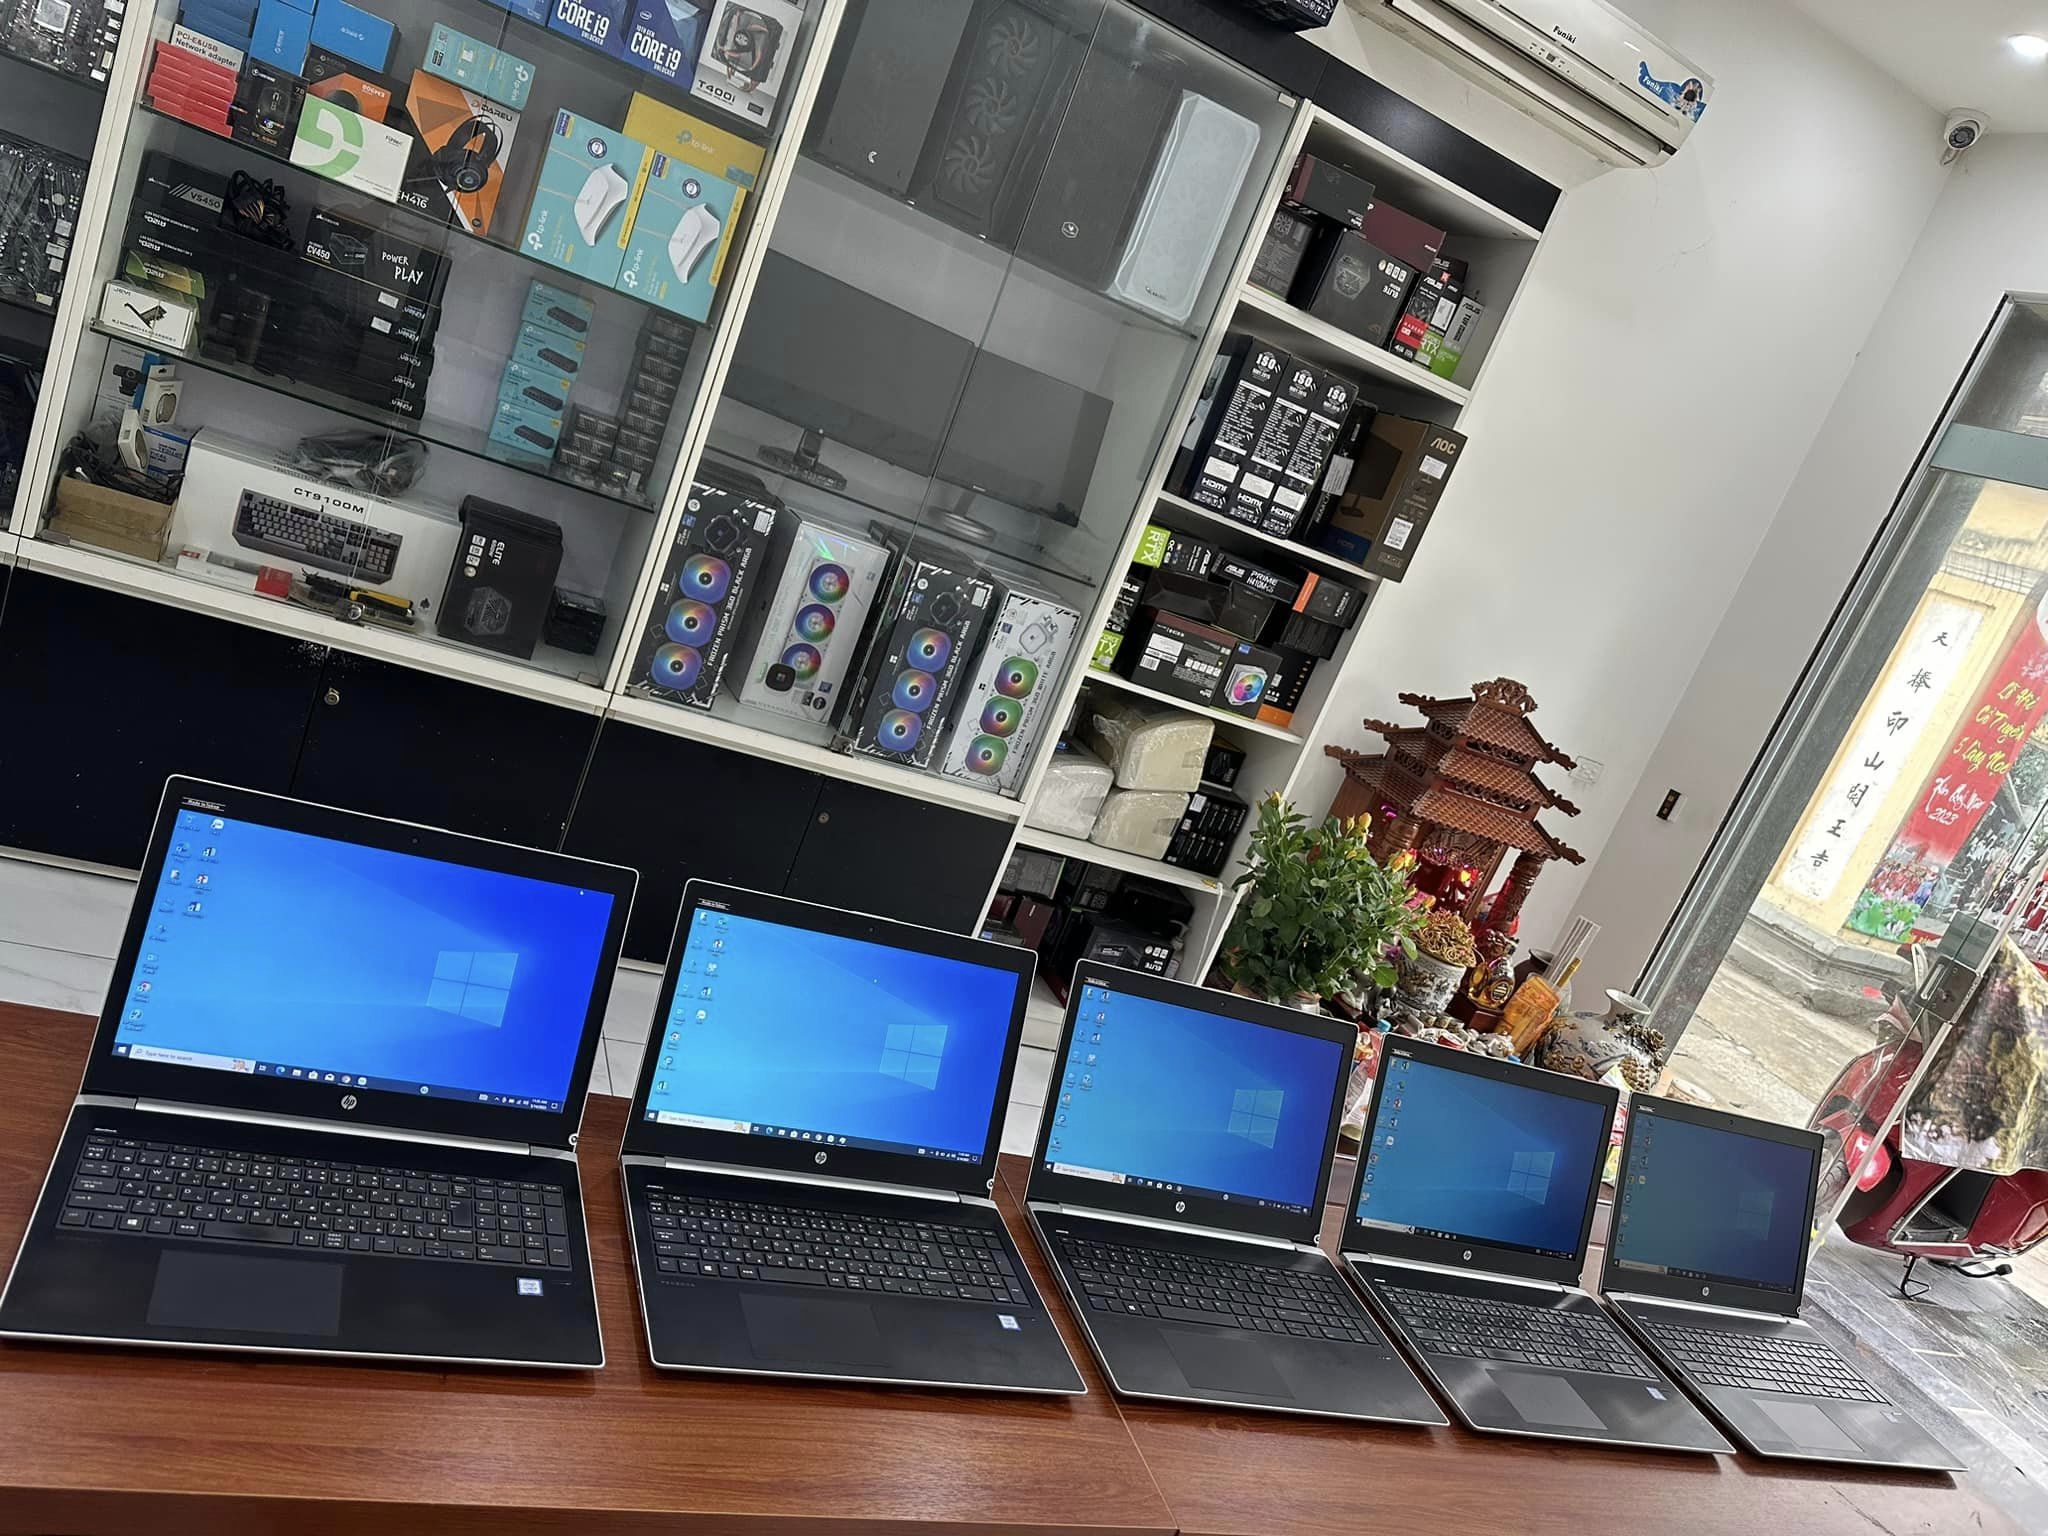 Laptop HP Probook 450-G5, i5 7200, Ram 8G, SSD 240G, Màn 15.6"